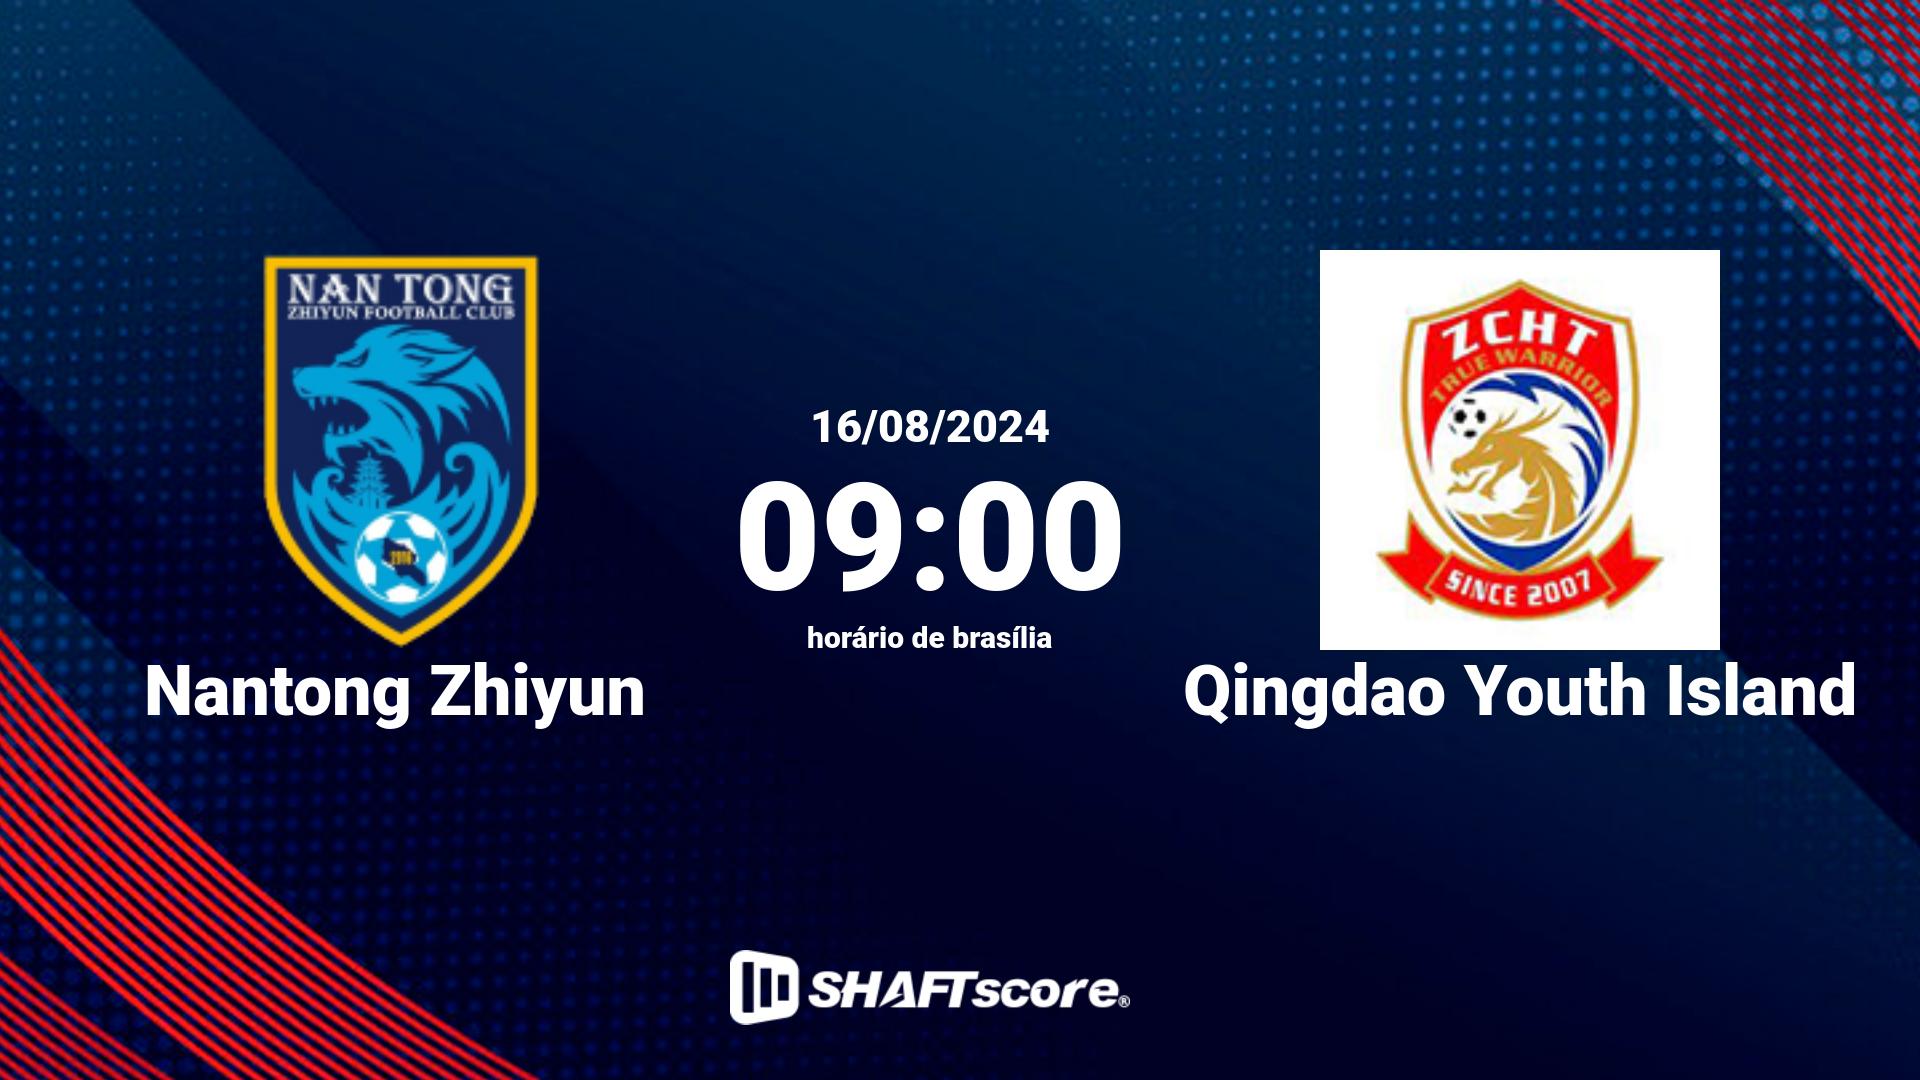 Estatísticas do jogo Nantong Zhiyun vs Qingdao Youth Island 16.08 09:00